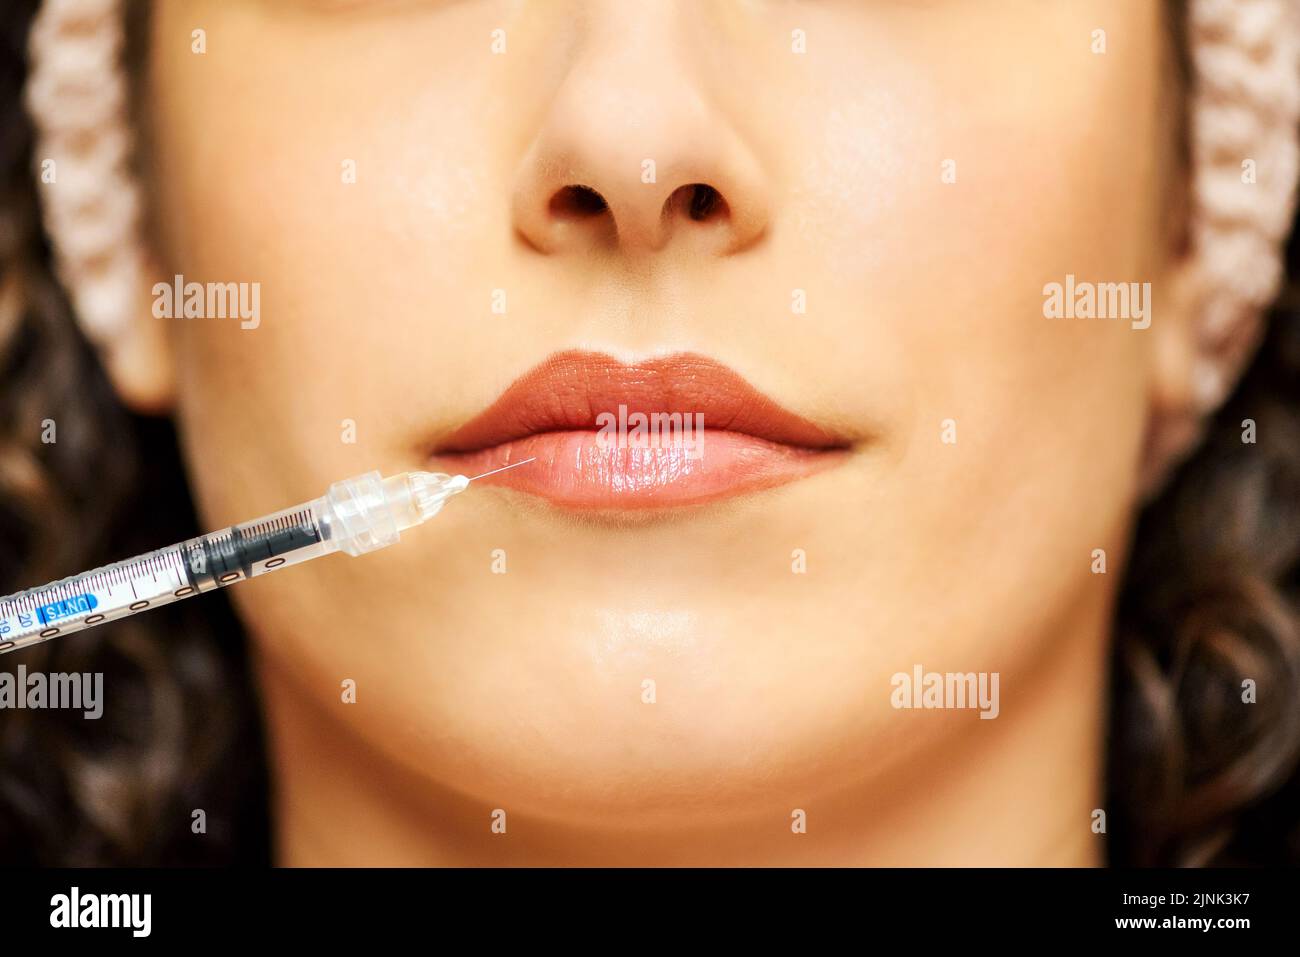 beauty treatment, botox, lippen aufspritzen, mesotherapie, beauty salon, lip filler, hyaluron, beauty treatments, botoxs Stock Photo